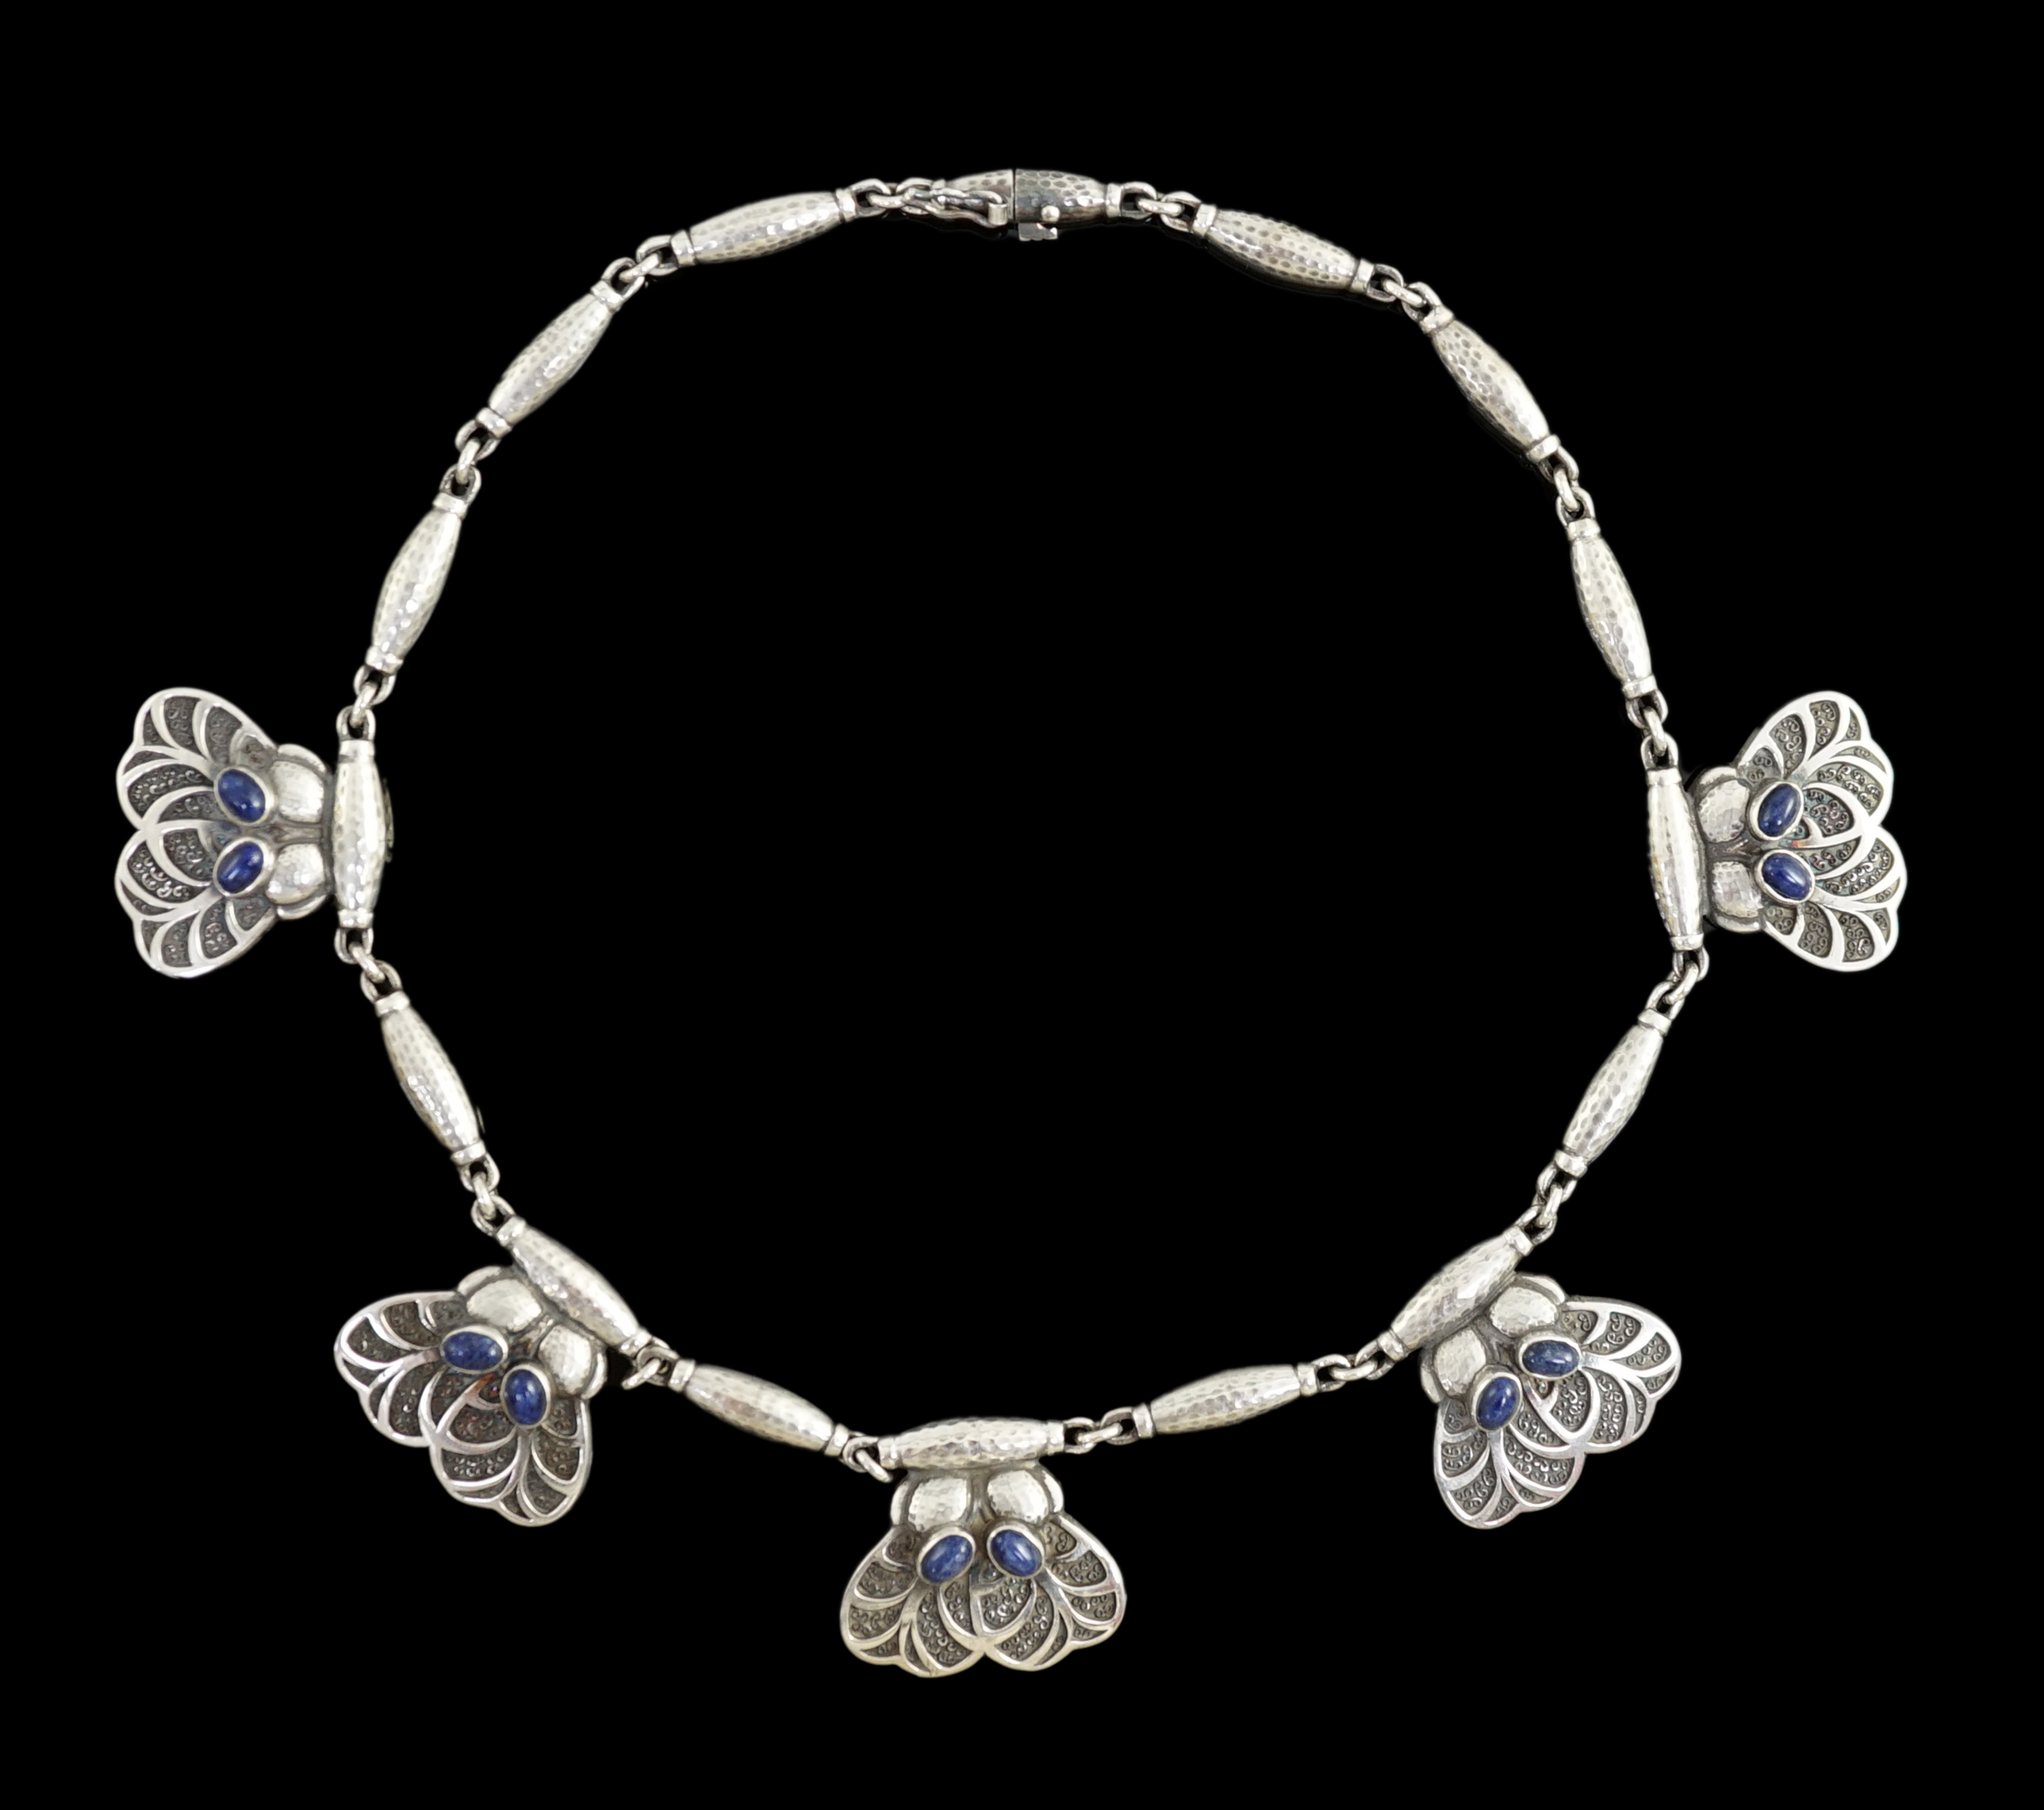 A Georg Jensen planished sterling silver and cabochon blue quartz set necklace, design no. 4                                                                                                                                